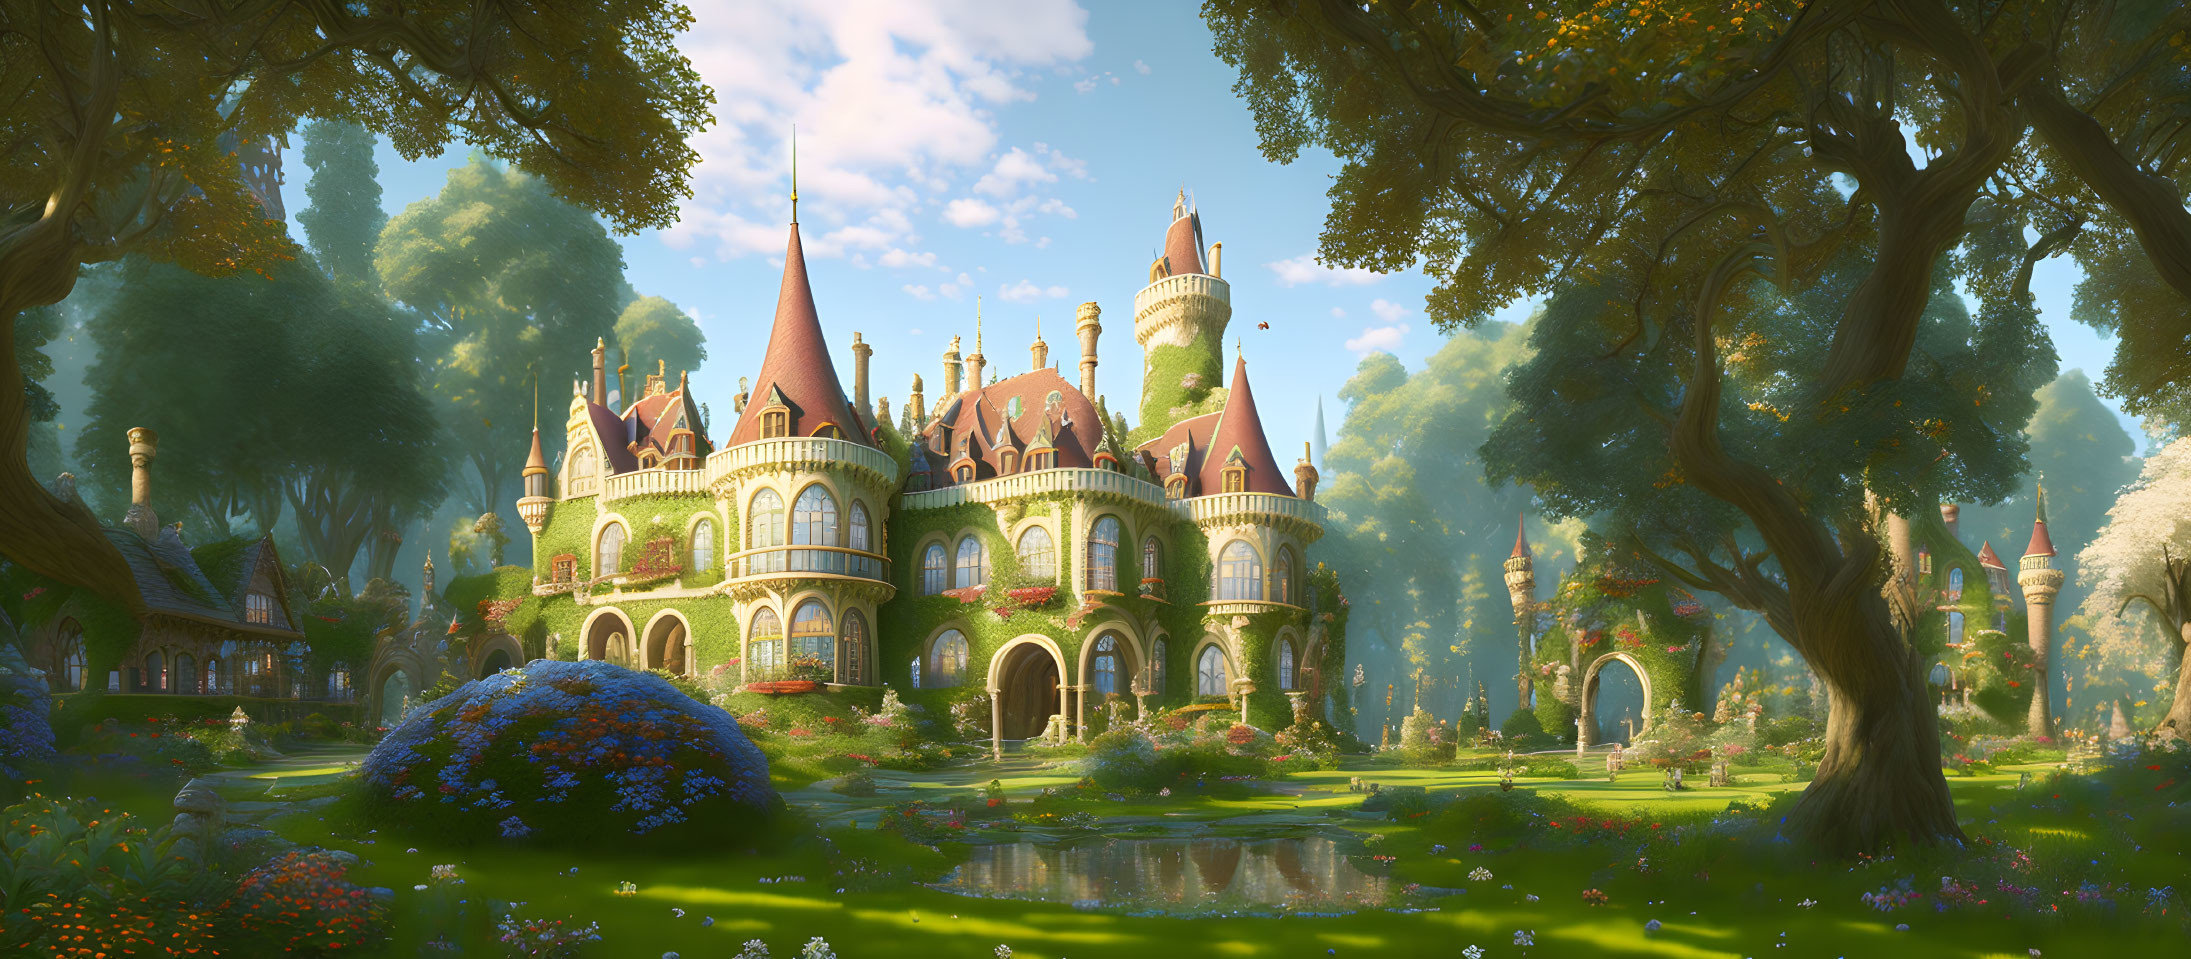 A castle directly taken from a fairy tale 